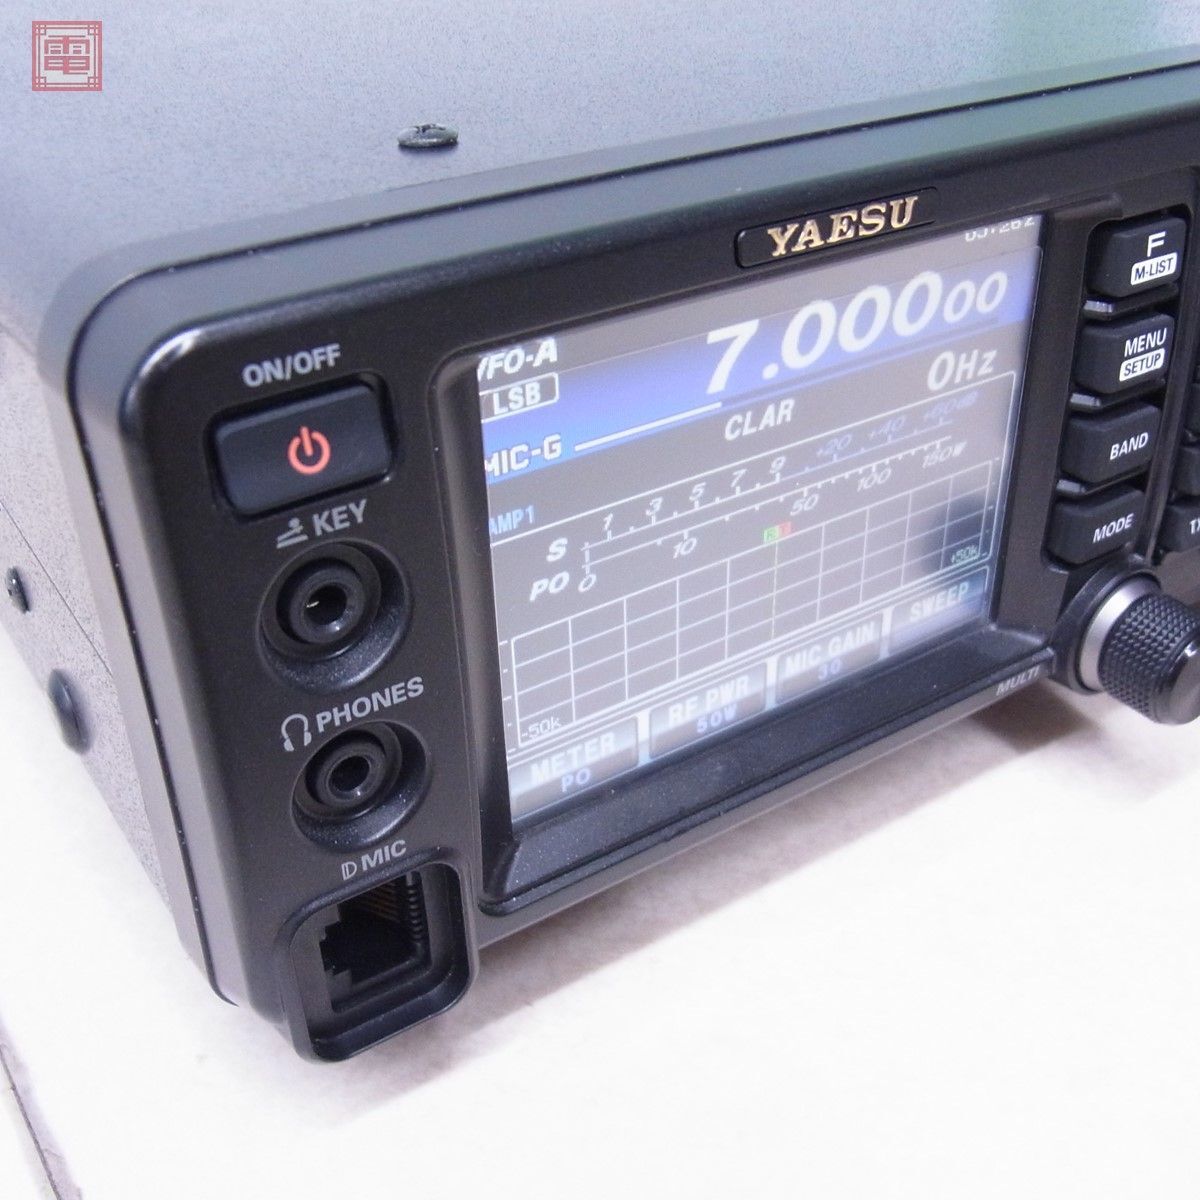  Yaesu Yaesu FT-991AS HF obi /50/144/430MHz 50W модифицировано товар [20